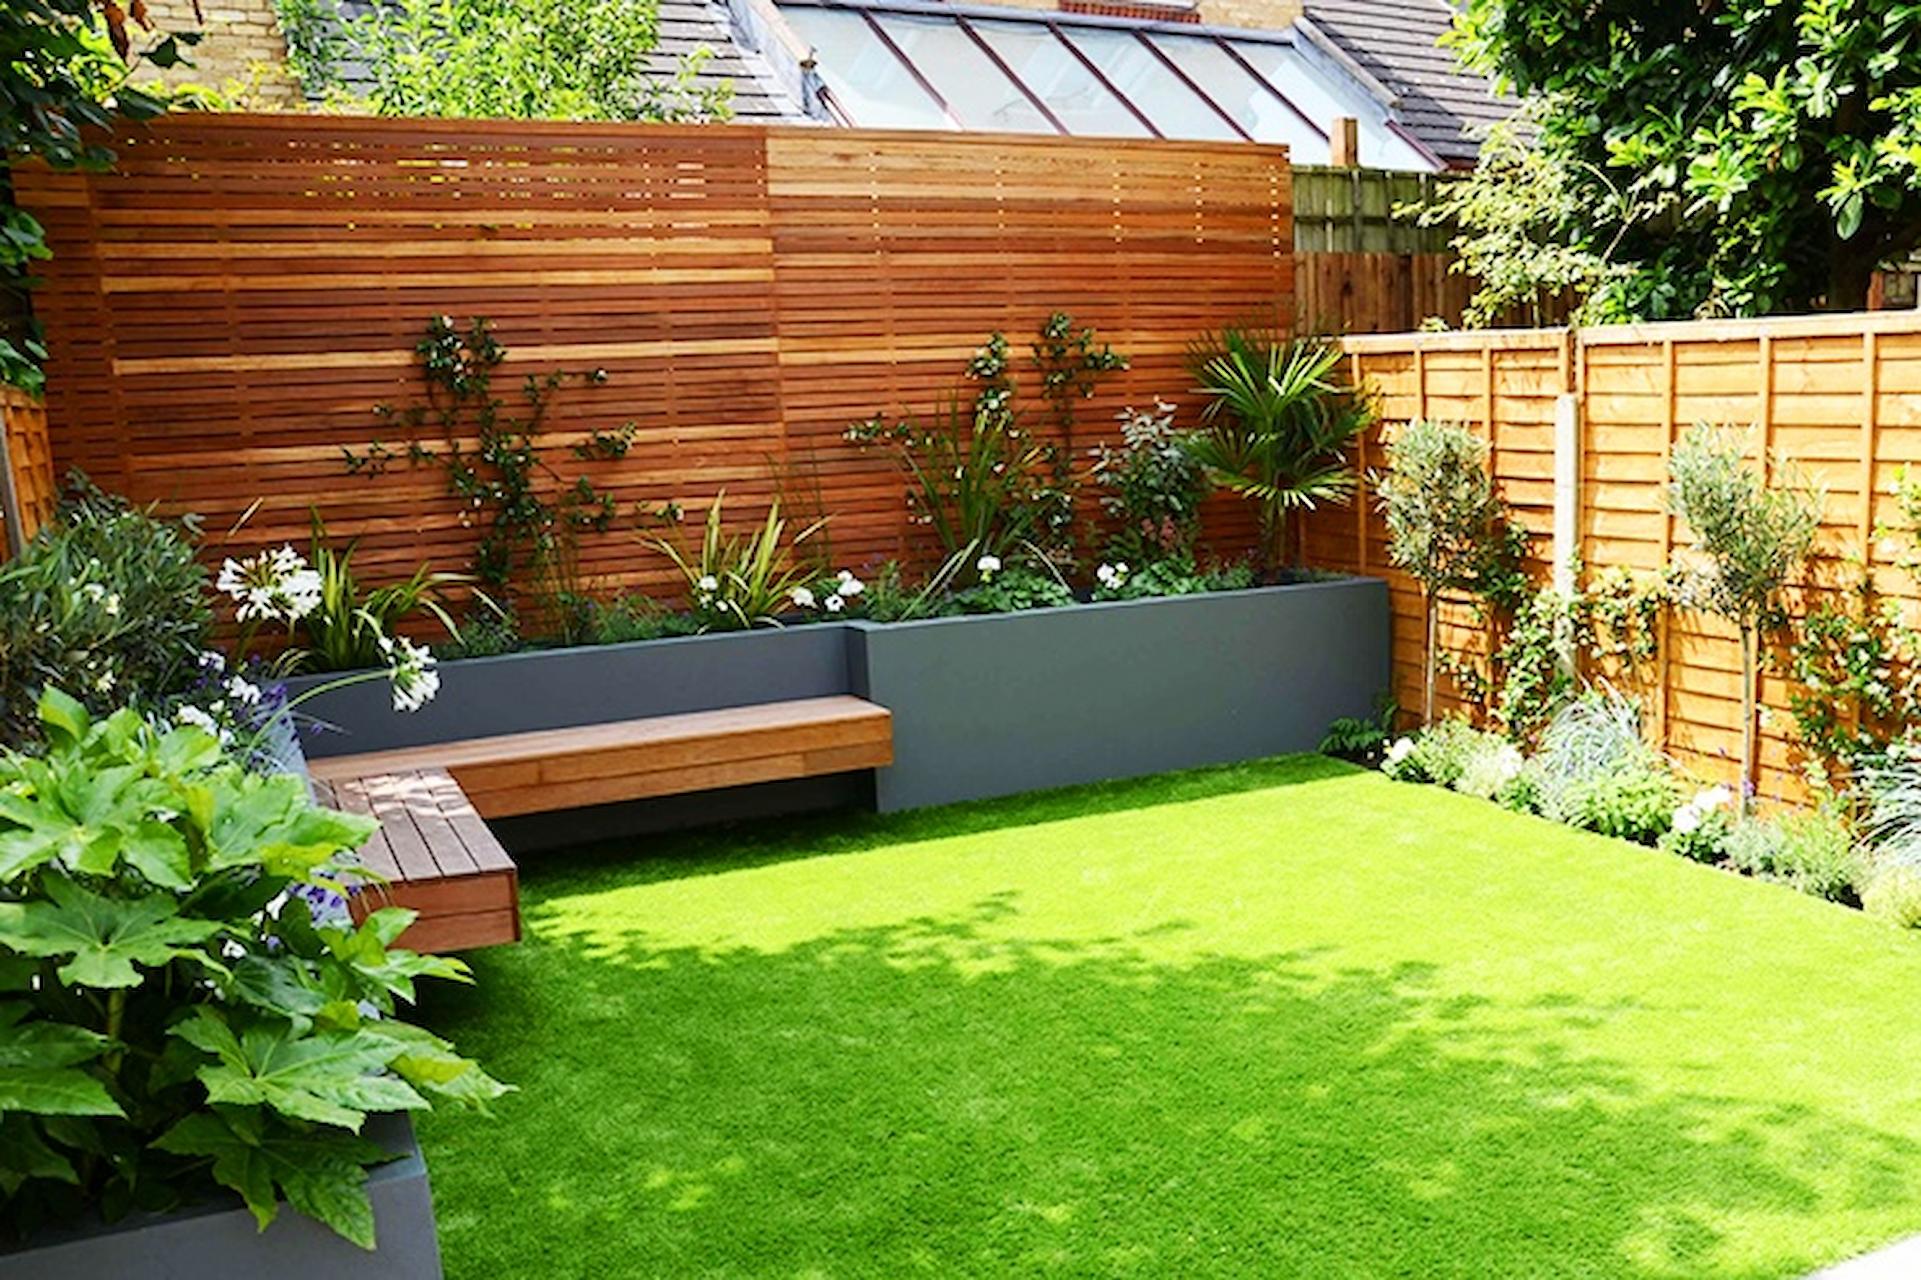 Tips To Create A Garden Space In An Apartment